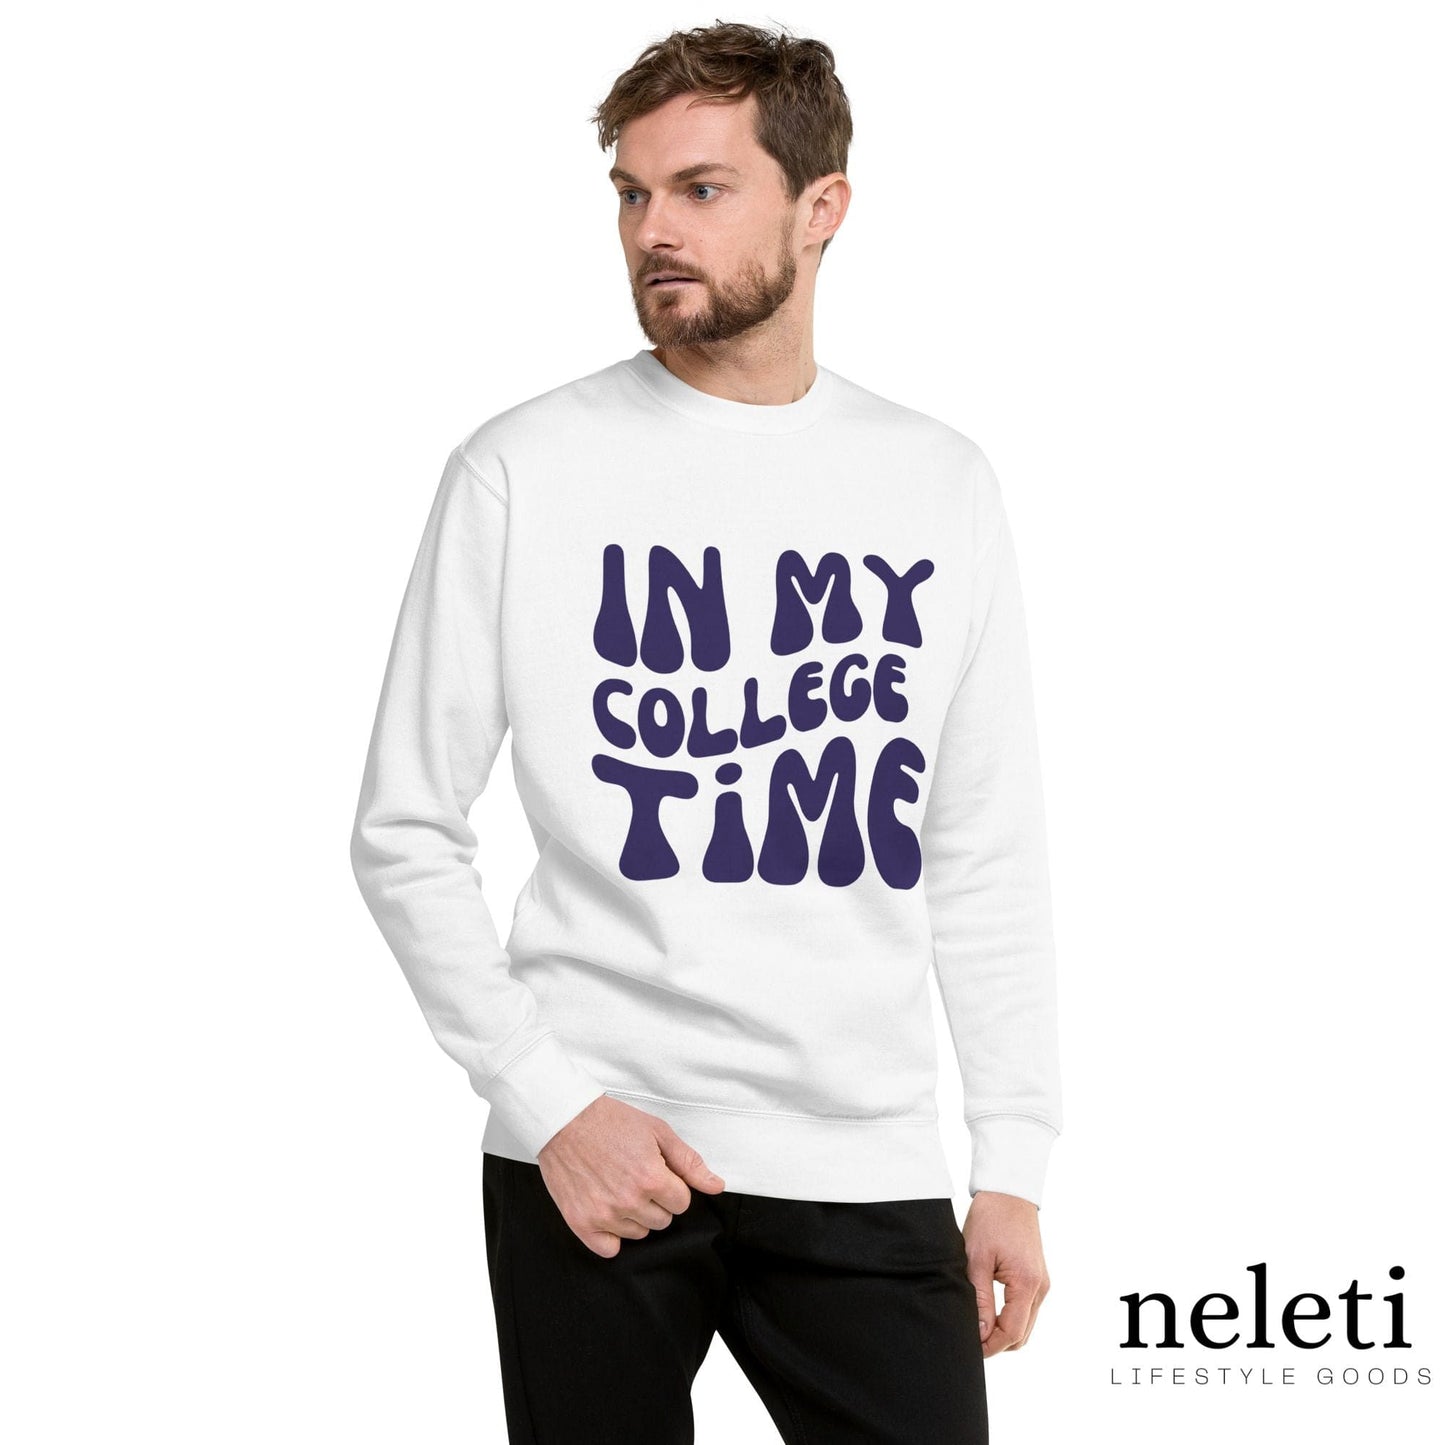 neleti.com-team-white-men-women-sweatshirts